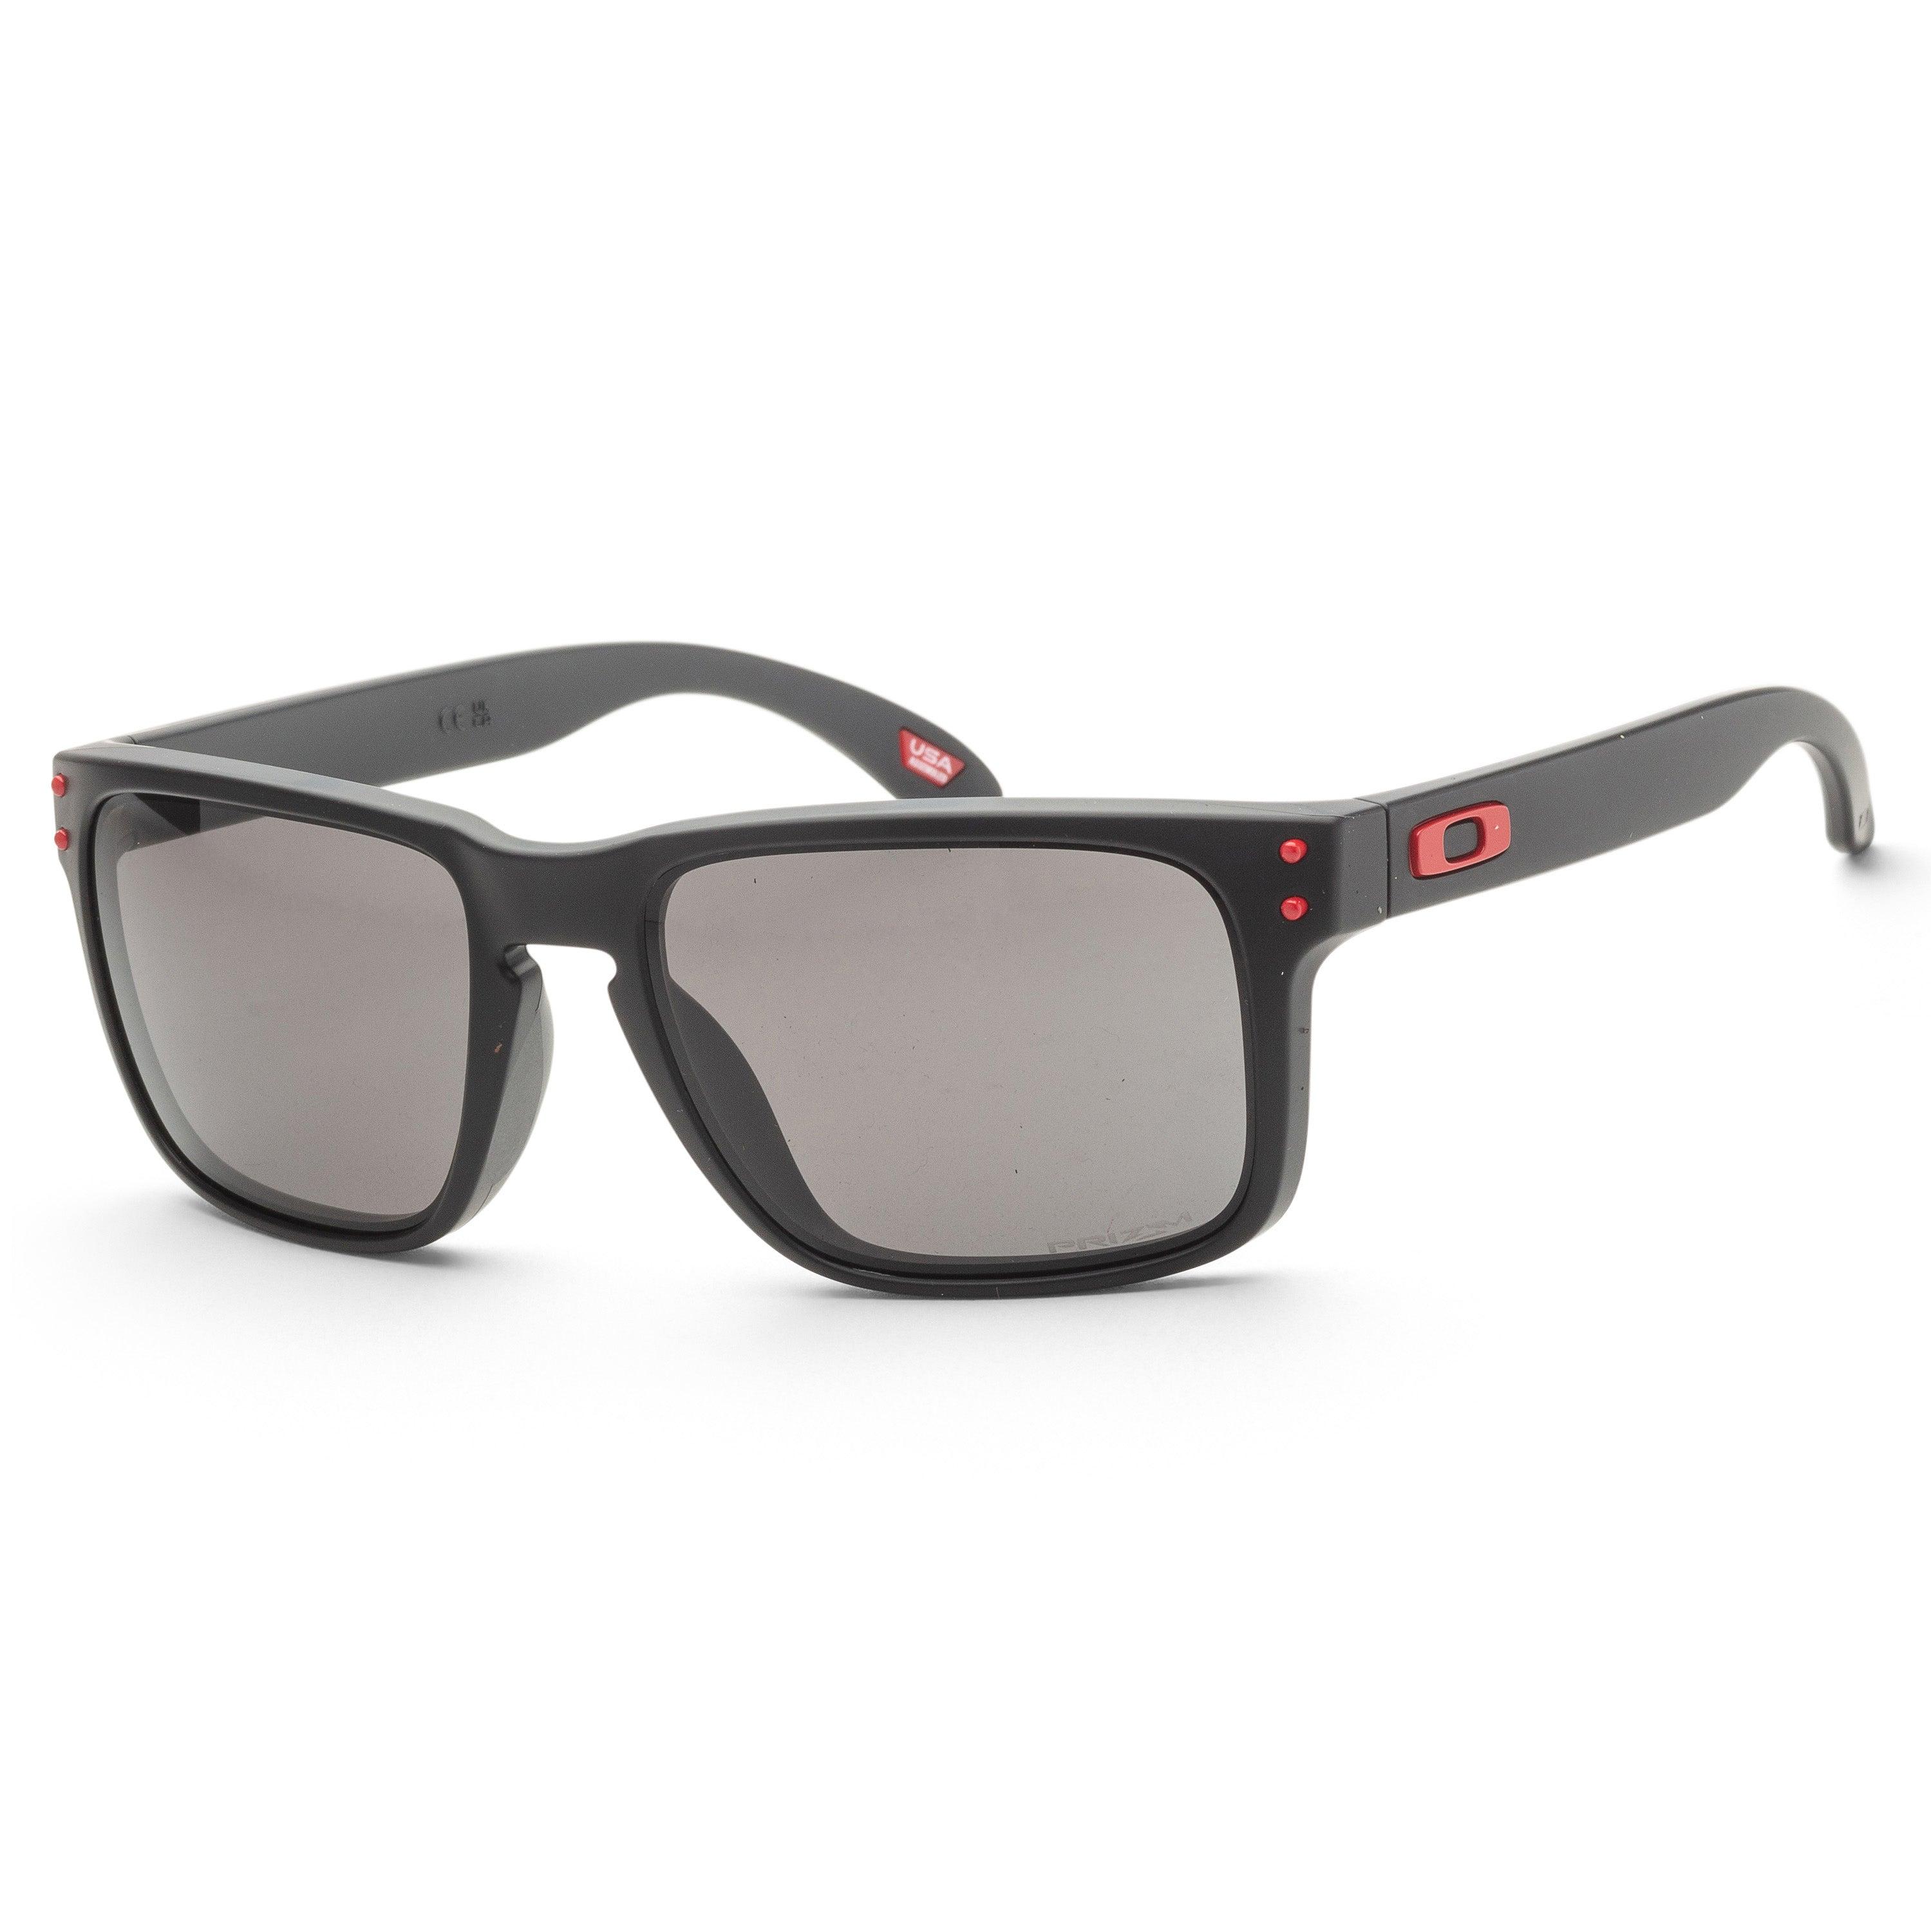 Oakley Holbrook - Alternate Fit Sunglasses | FramesDirect.com